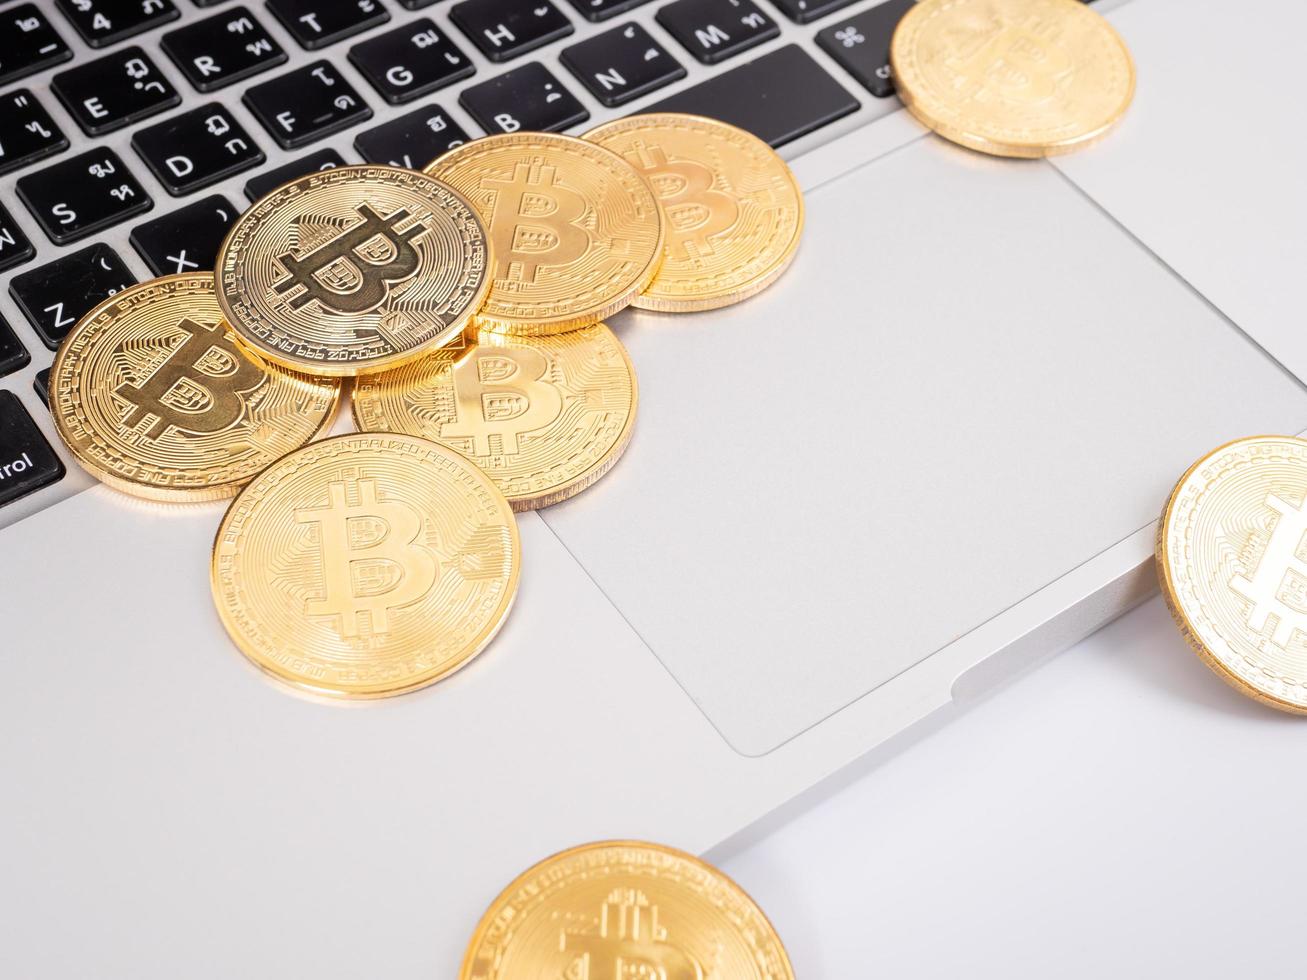 criptomoeda digital bitcoin-cash no notebook foto